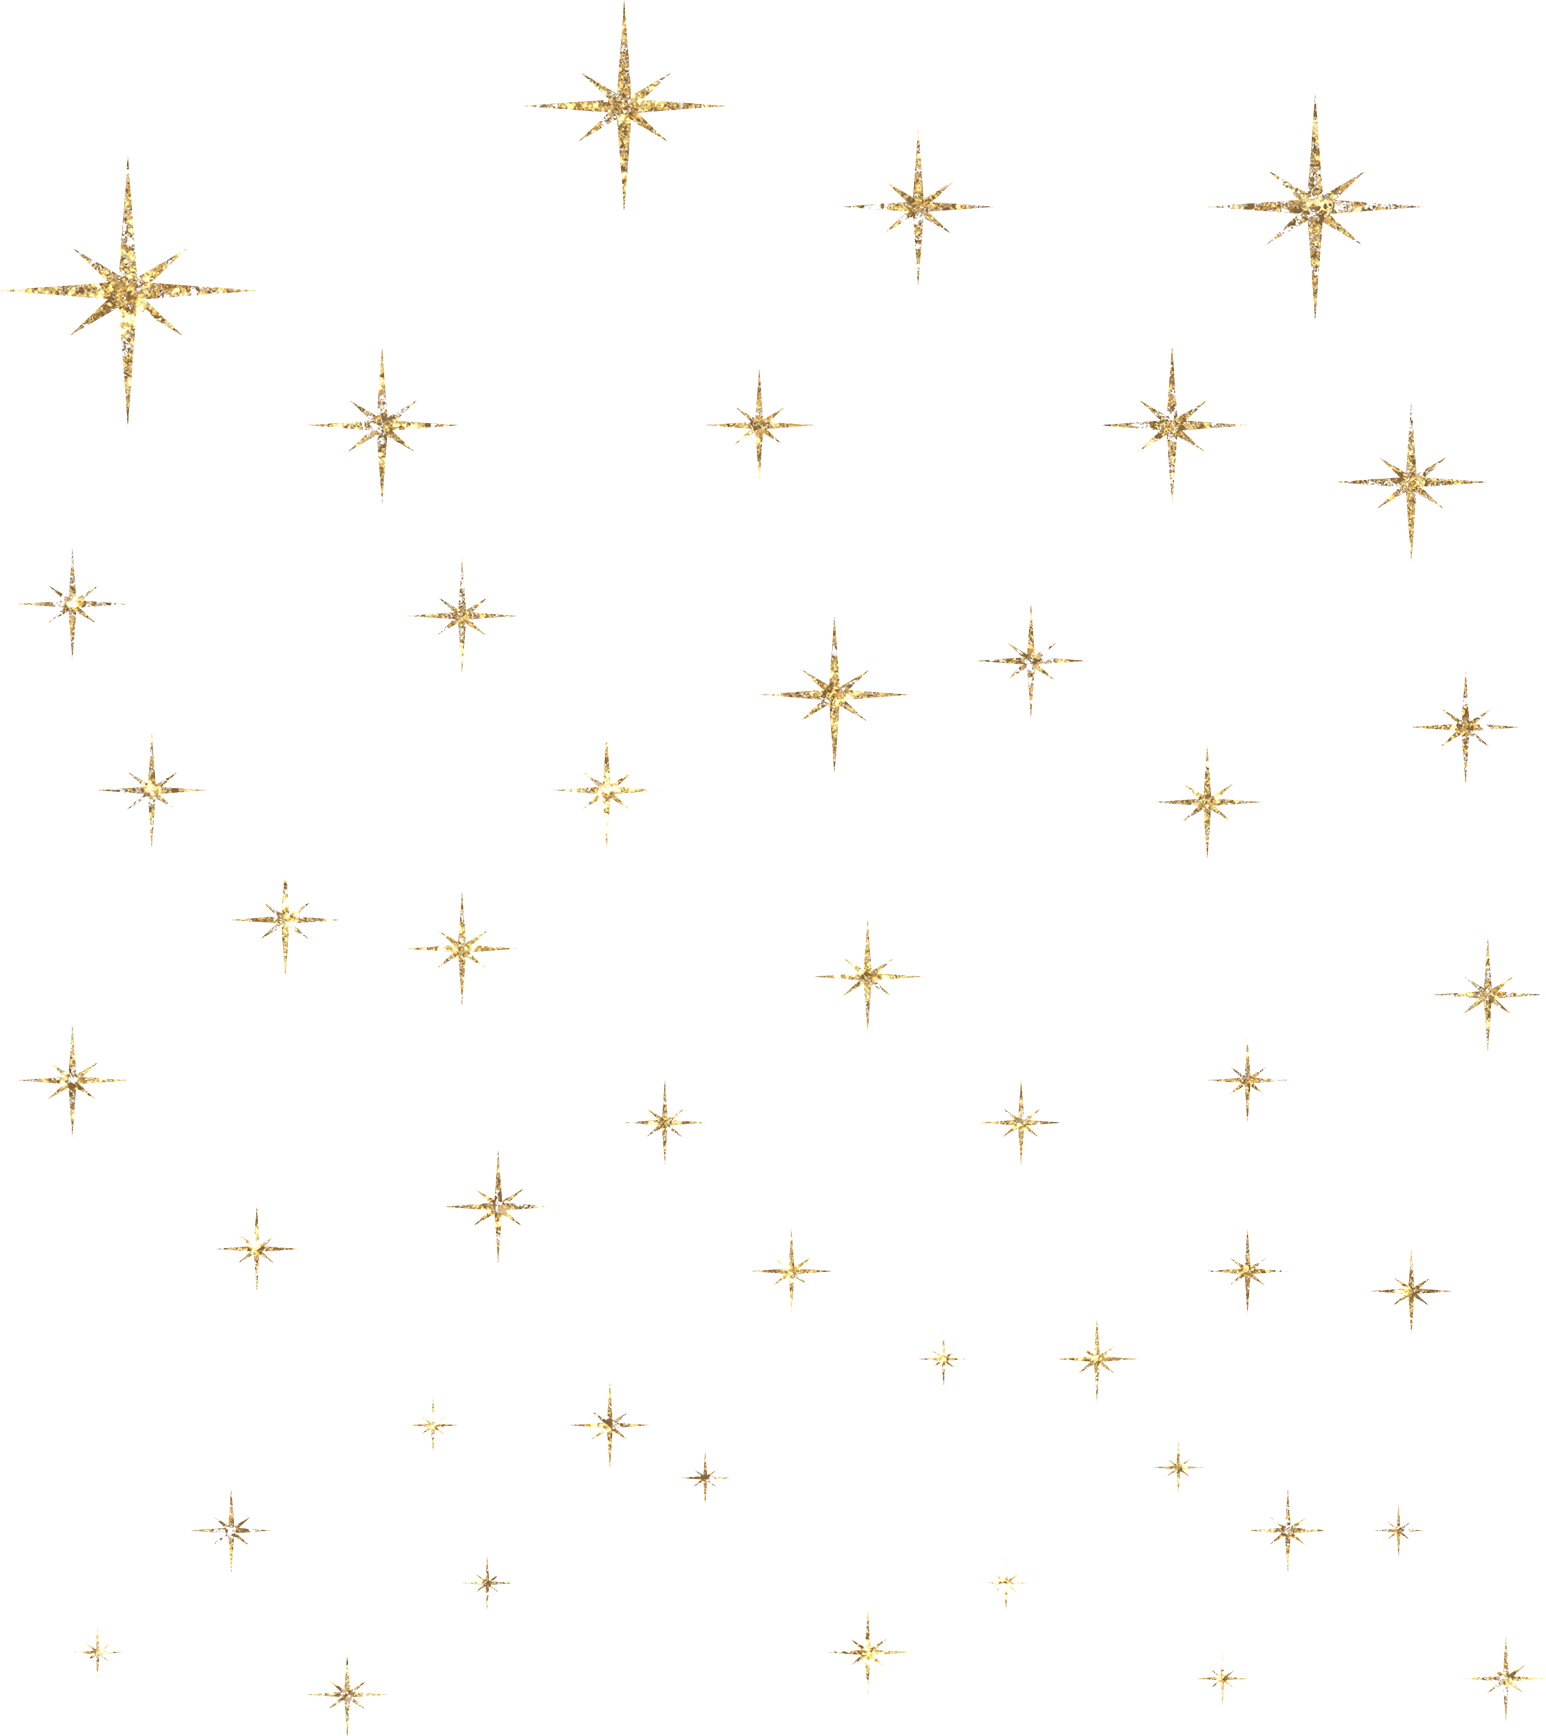 Glitter Gold Star